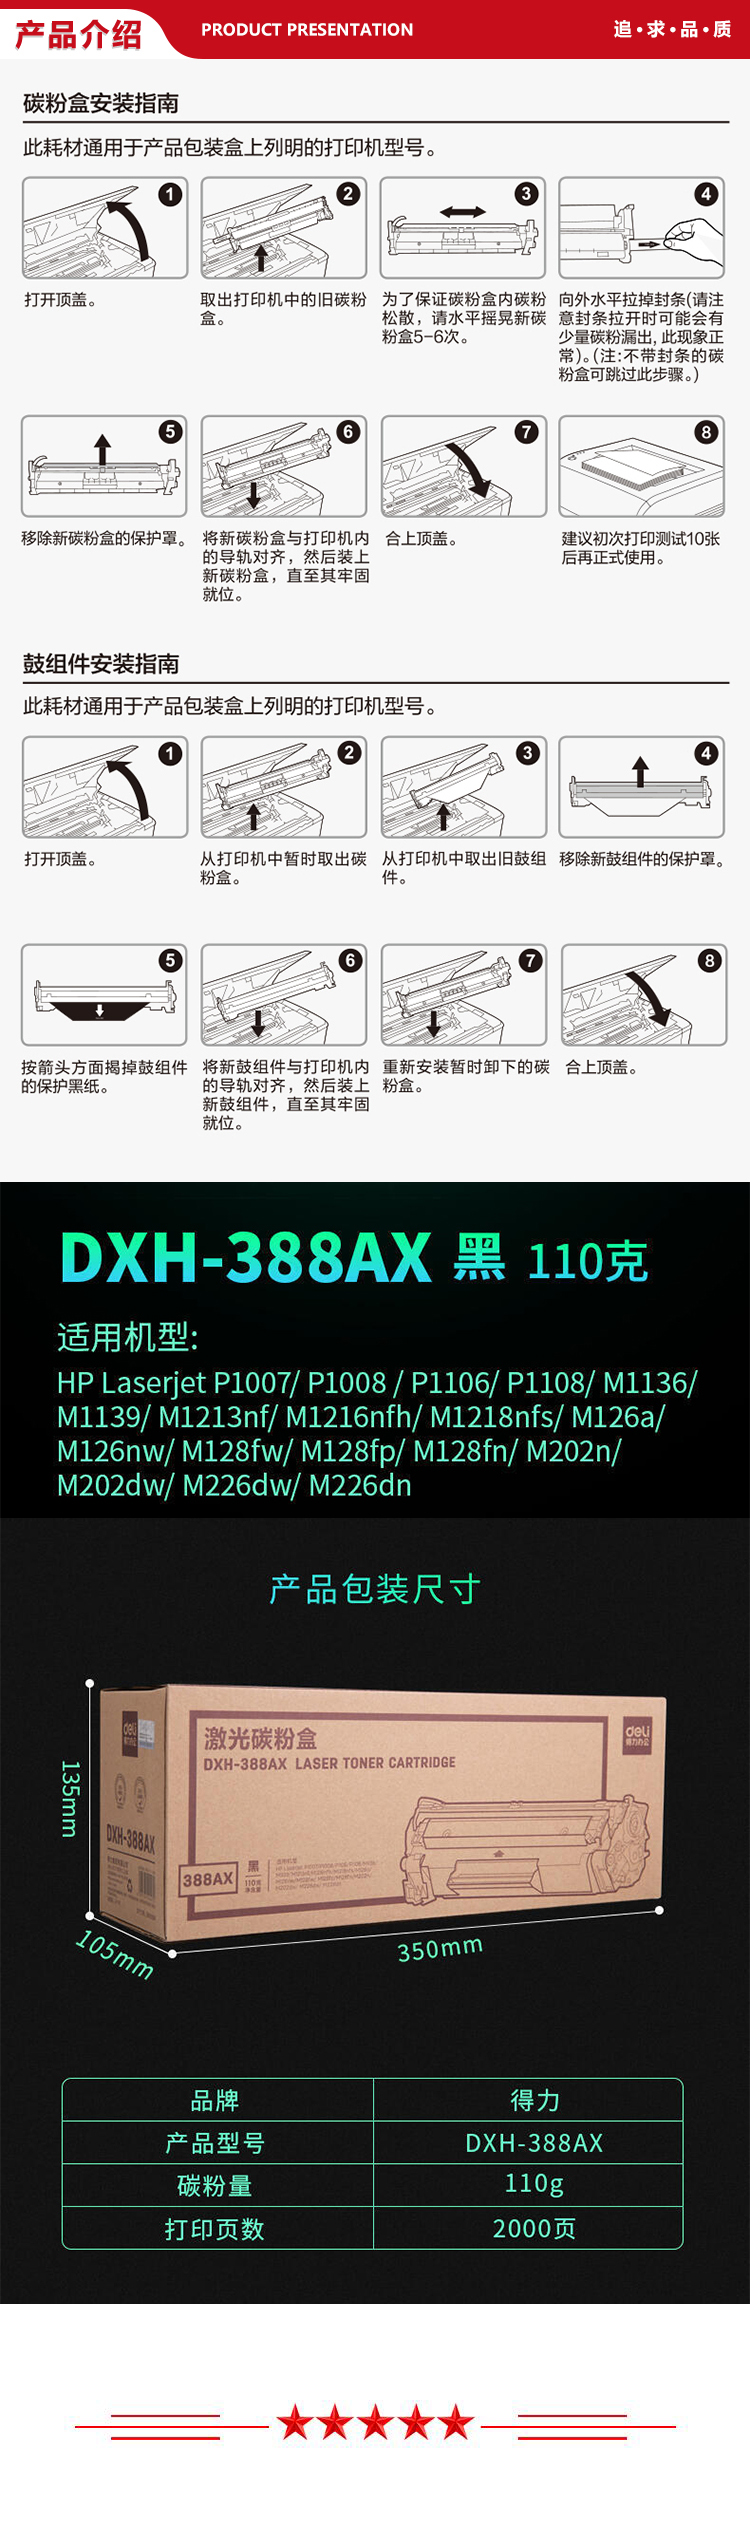 DXH-388AX-.jpg